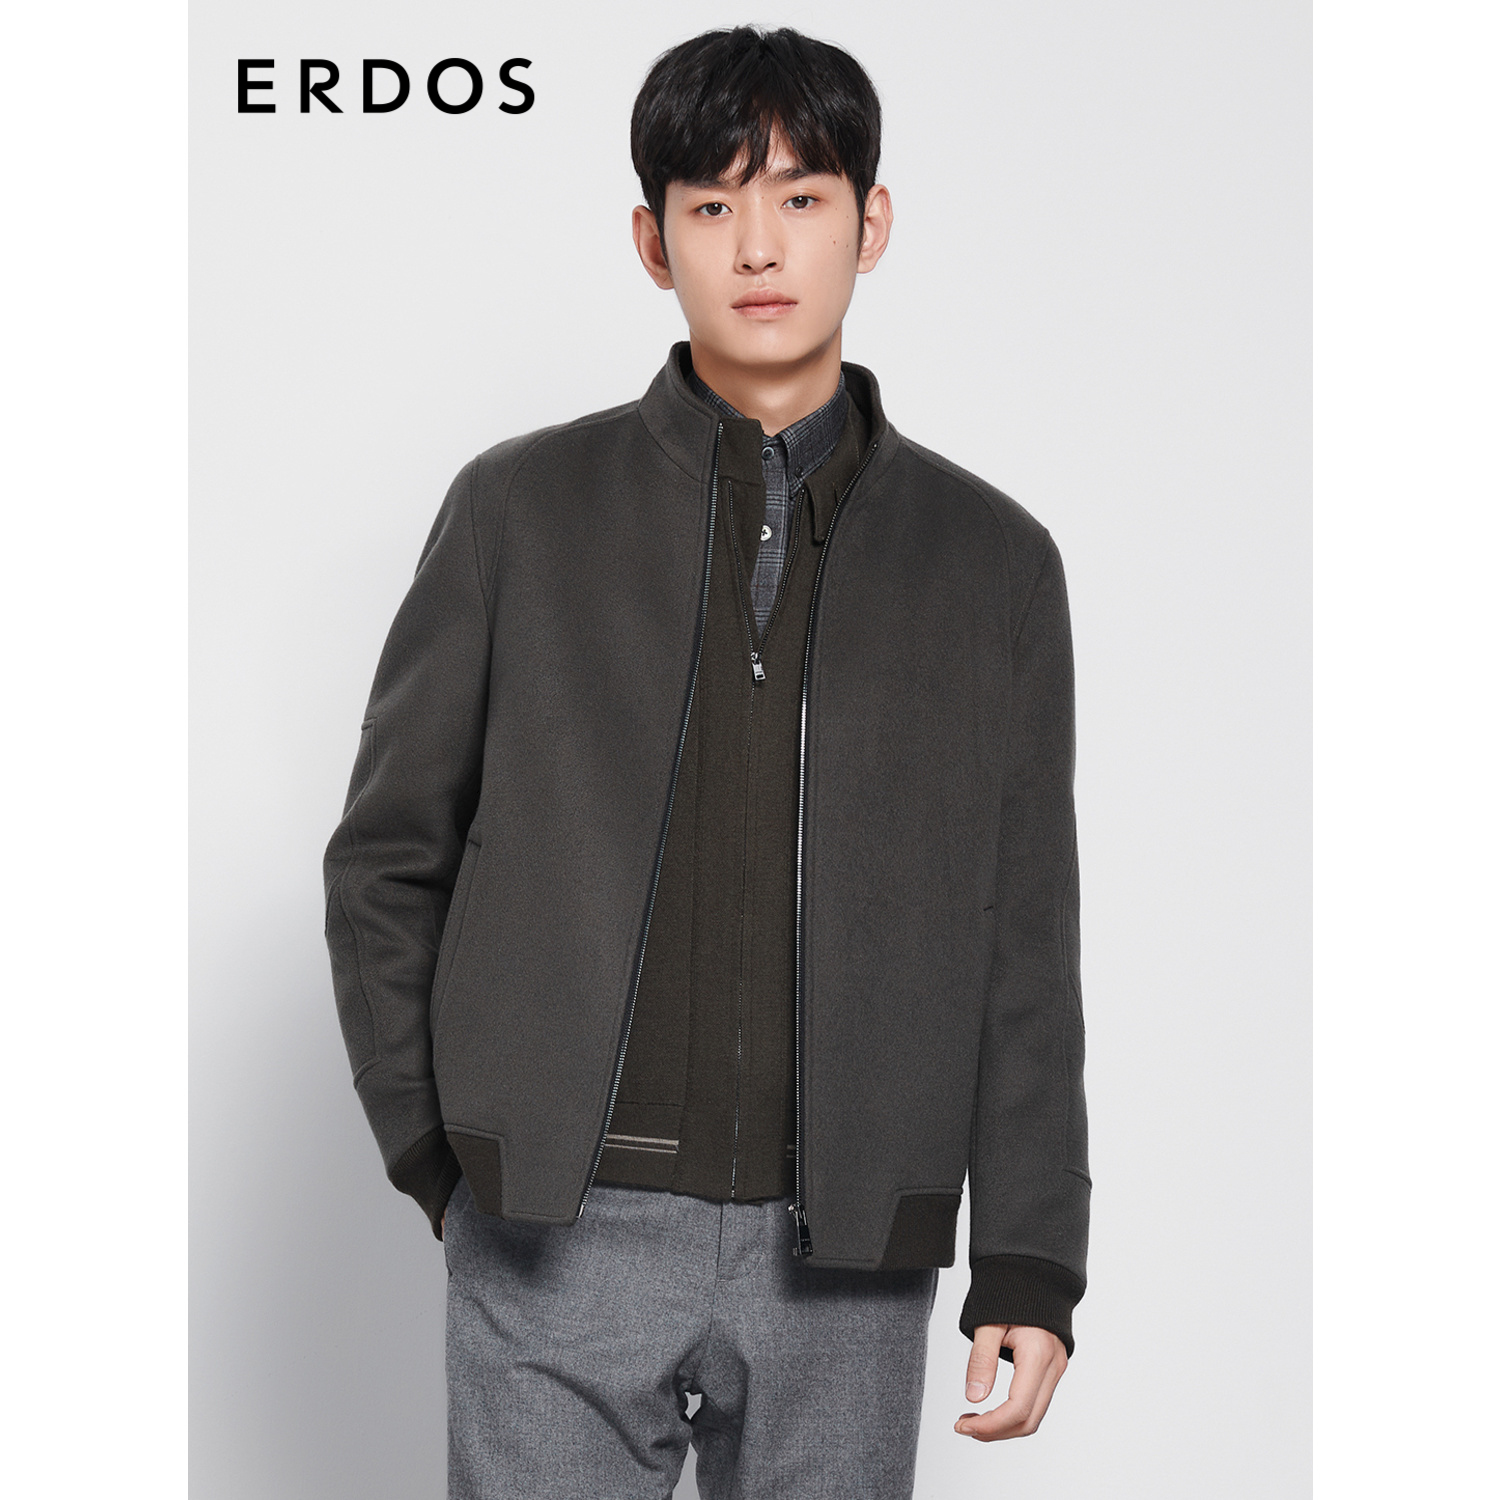 ERDOS 男装纯羊绒夹克棒球服拉链上衣短款外套运动时尚有型百搭